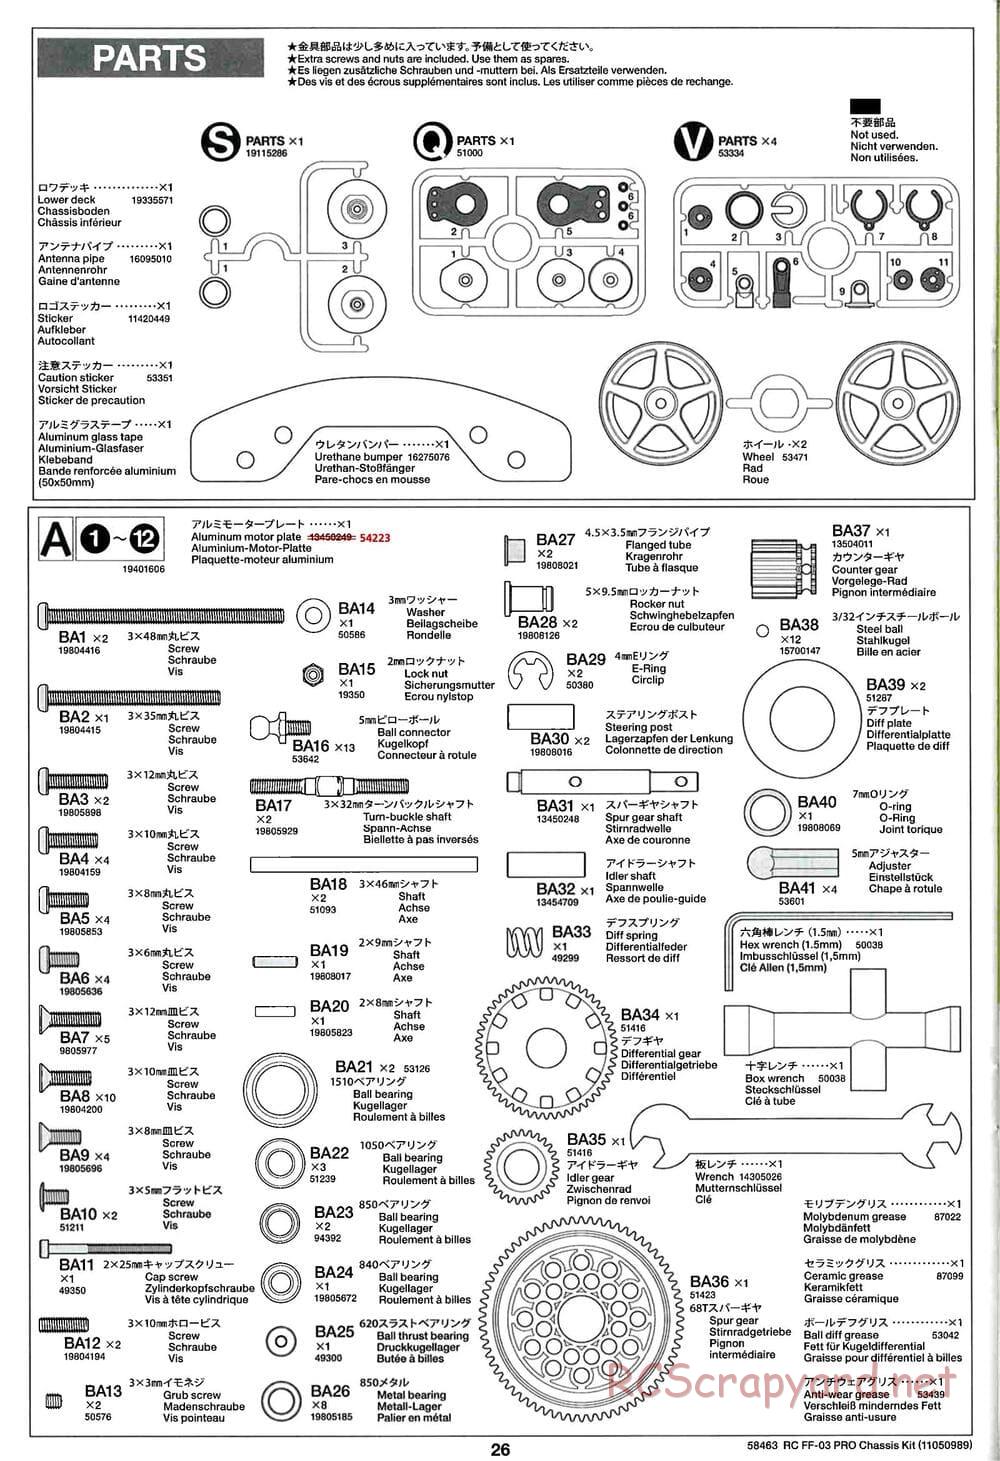 Tamiya - FF-03 Pro Chassis - Manual - Page 26